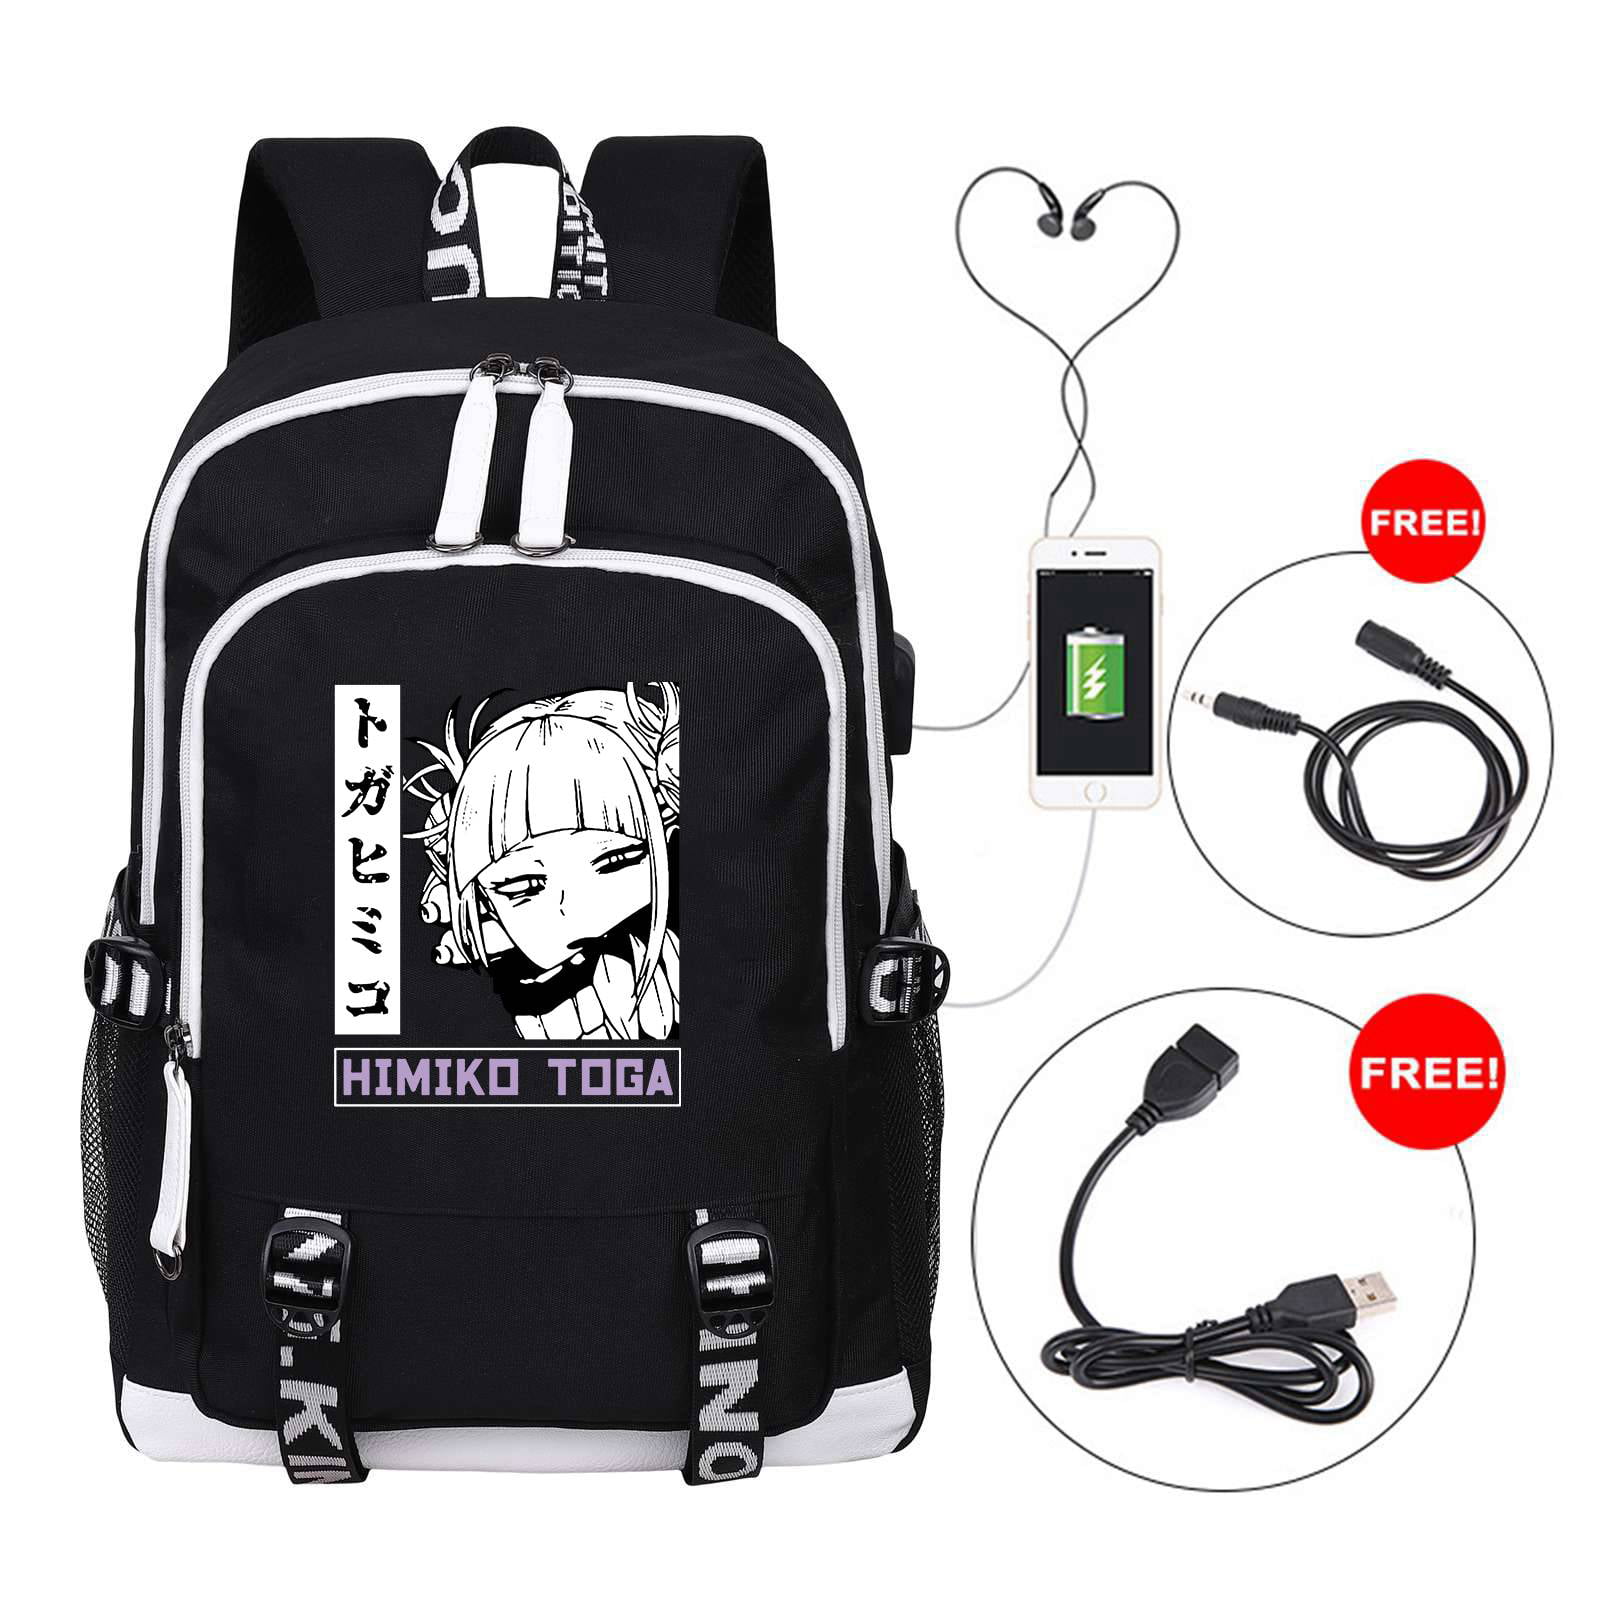 Cute Anime Backpack Discount - www.edoc.com.vn 1693442368